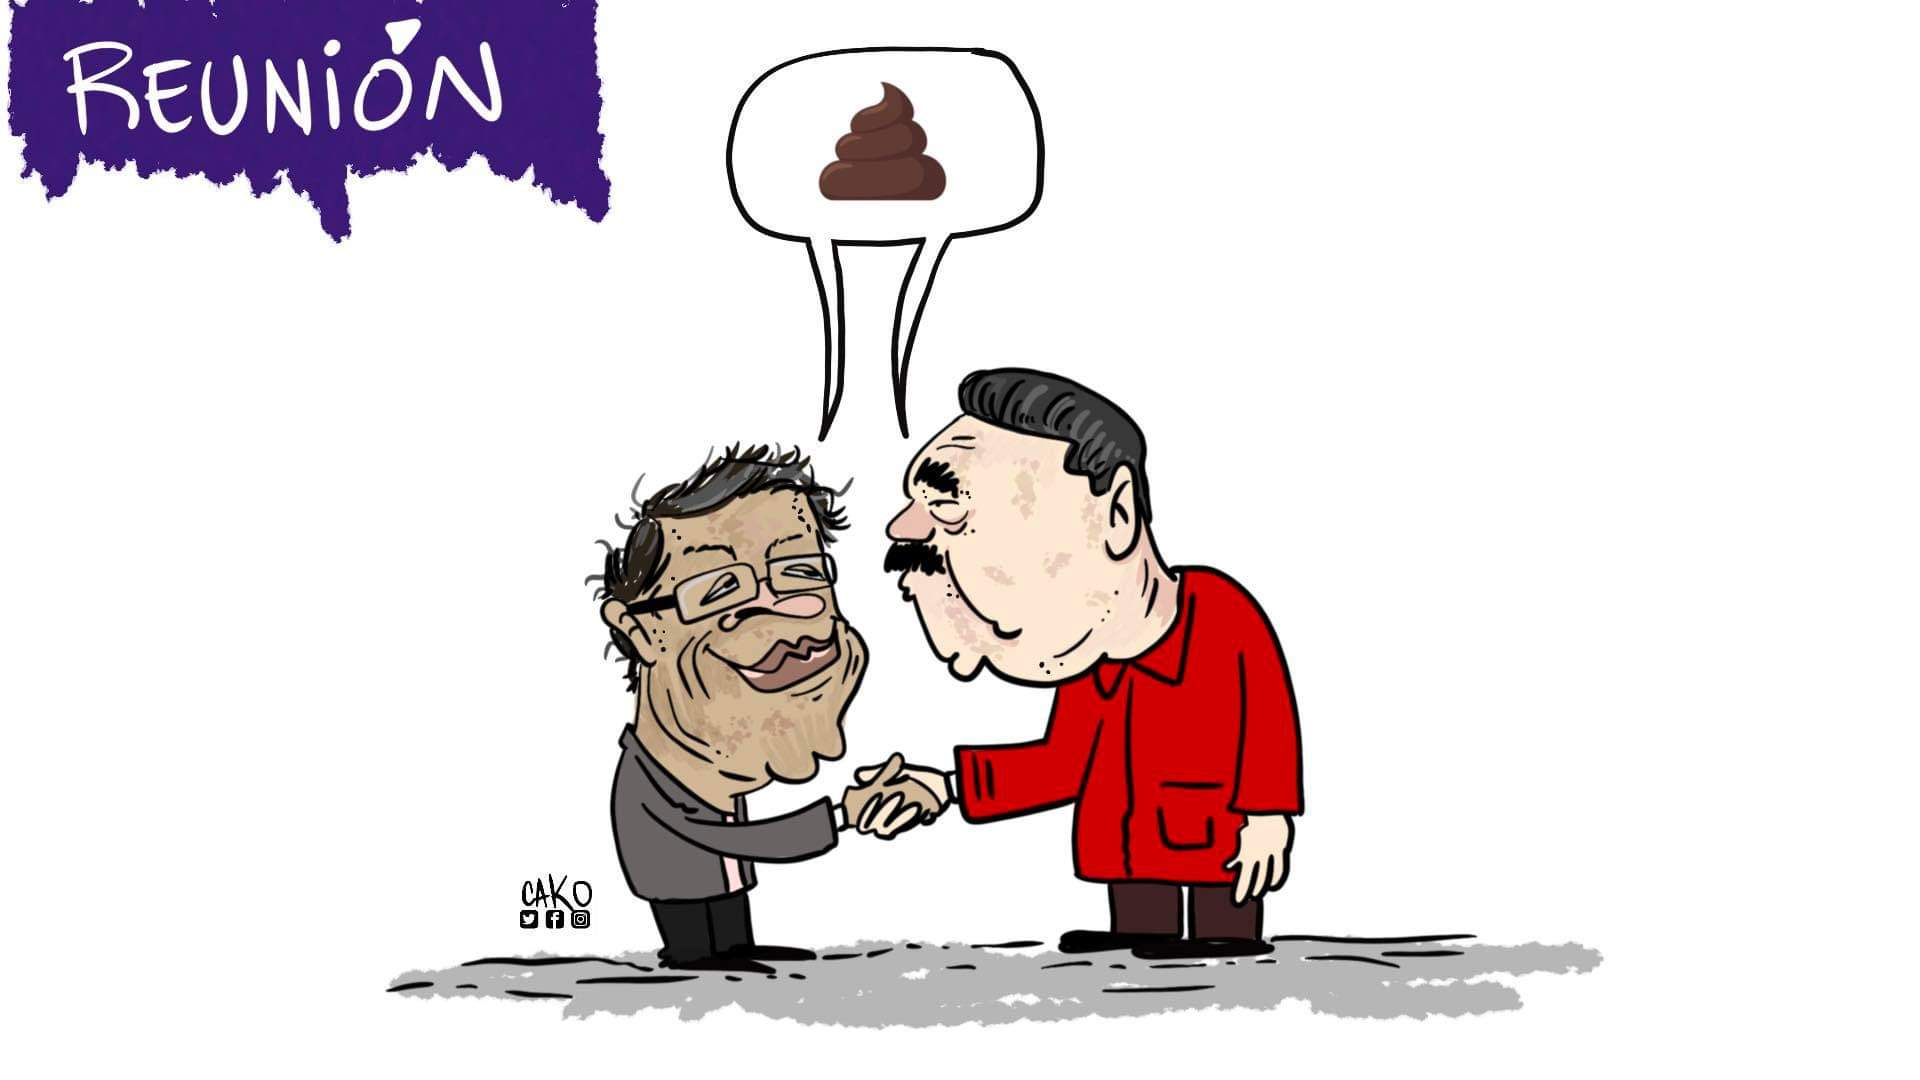 The Cartoon: The Meeting